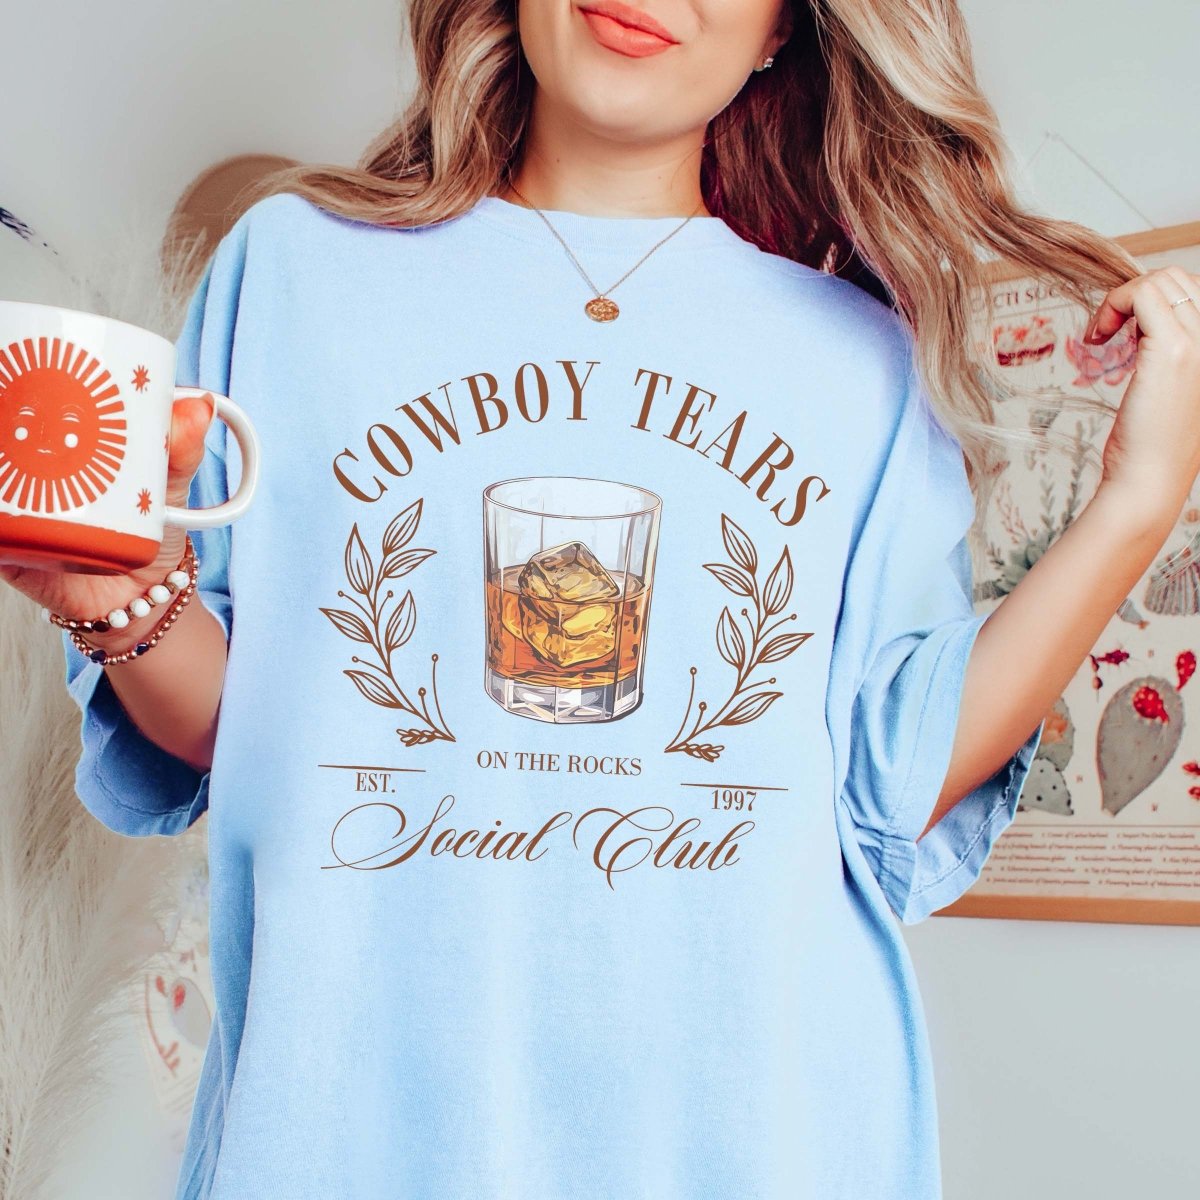 Cowboy Tears Social Club Wholesale Tee - Limeberry Designs